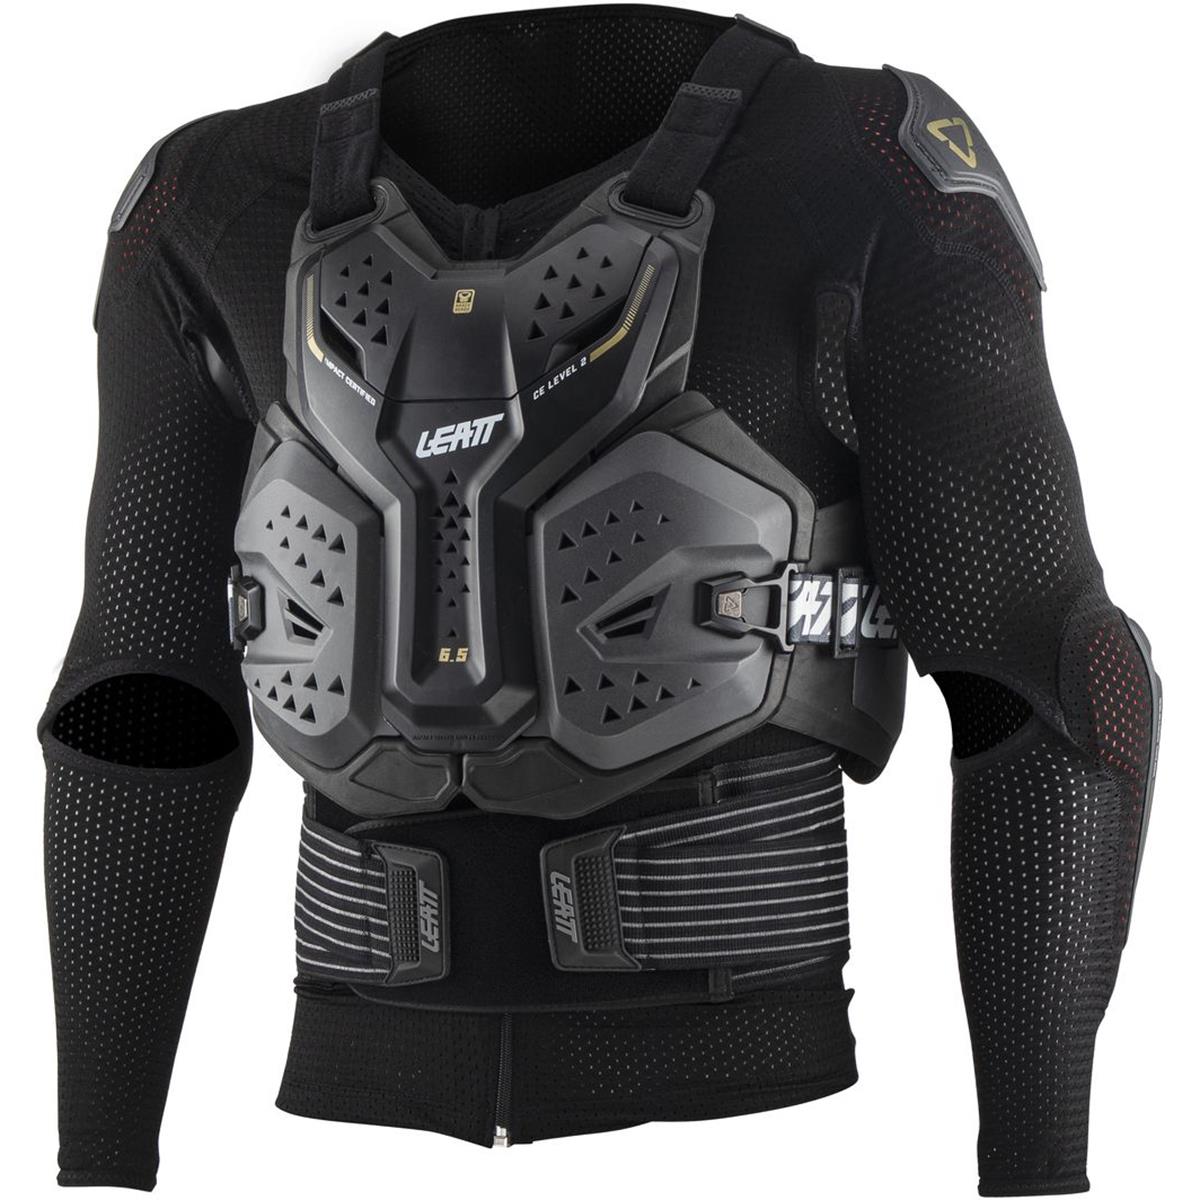 Leatt Protector Jacket Body Protector 6.5 Black/Gray